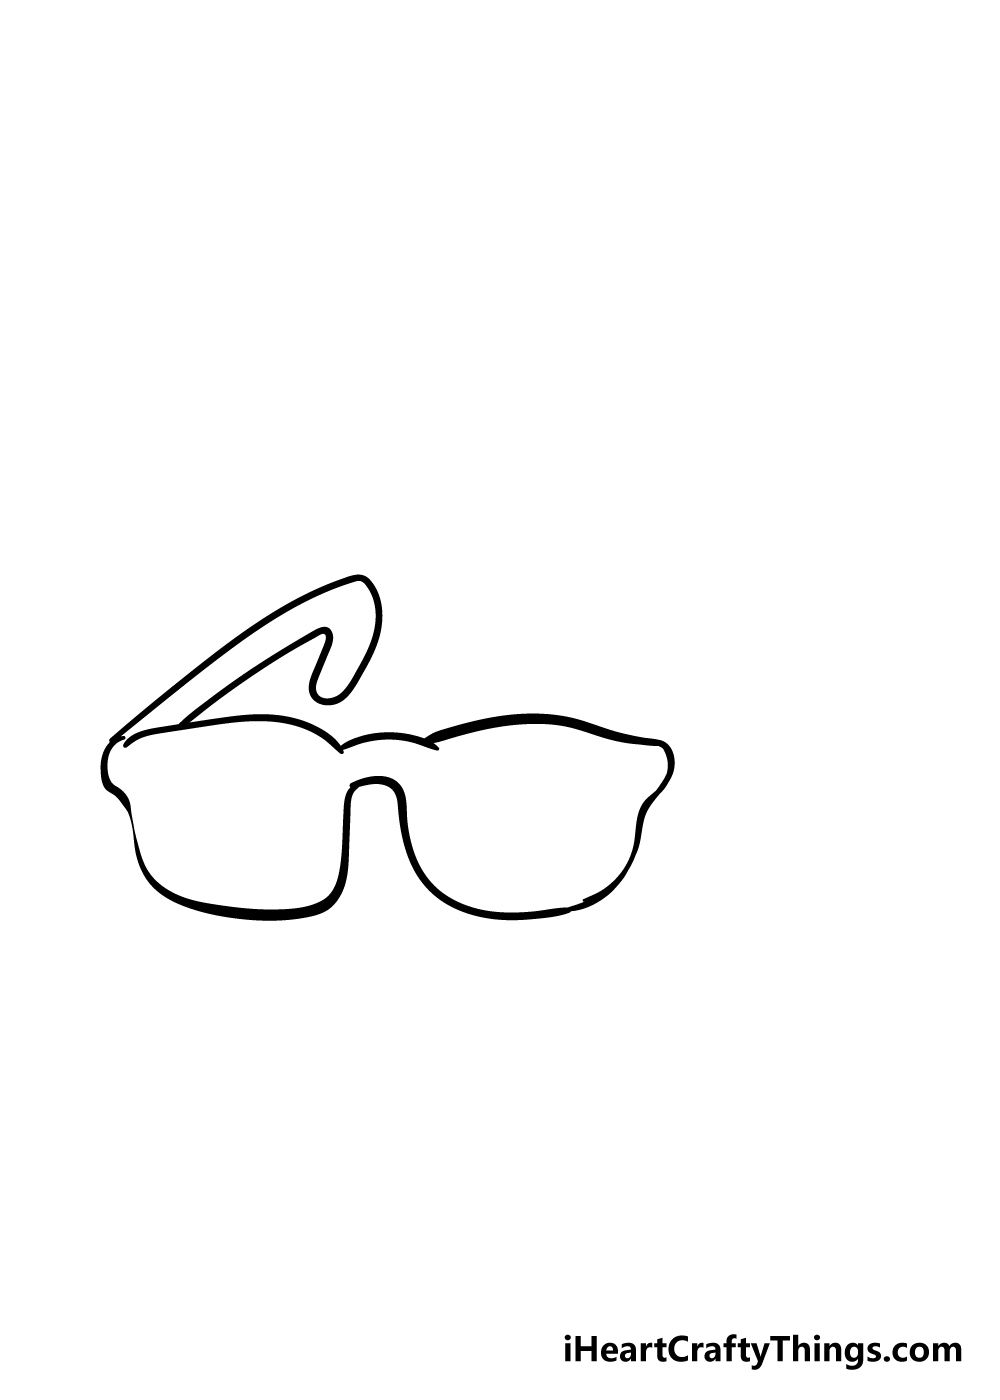 Glasses drawing